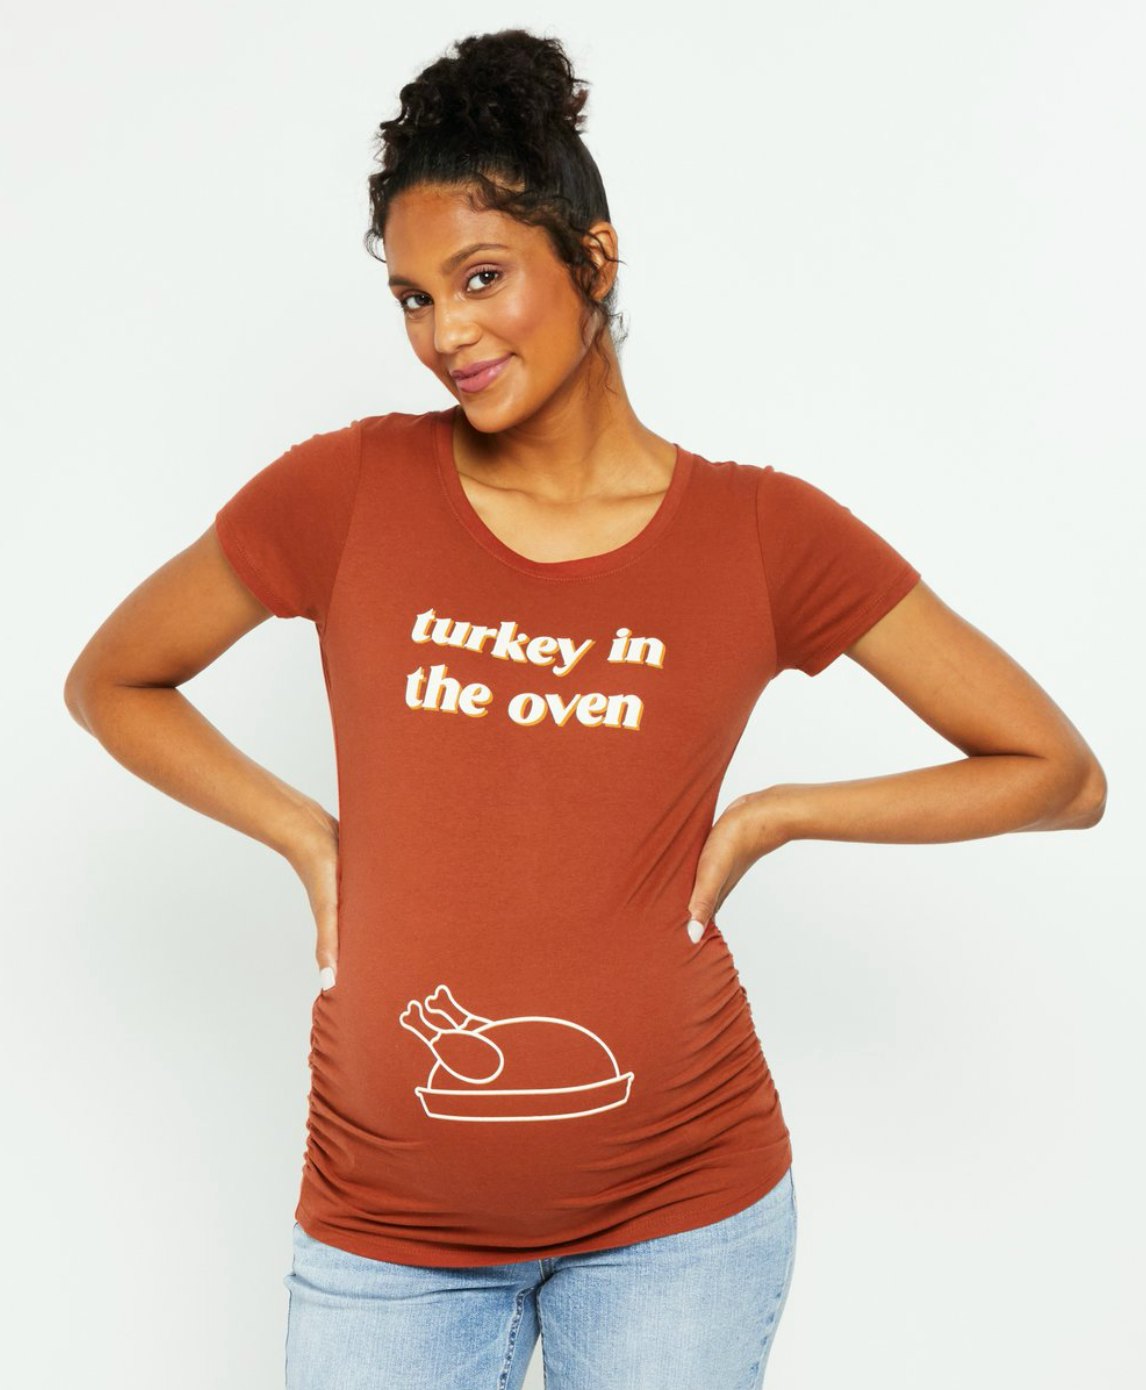 Extra Thankful This Year T-Shirt Women Thanksgiving Pregnancy Announcement Shirt Cute Baby Feet Fall Maternity Tops